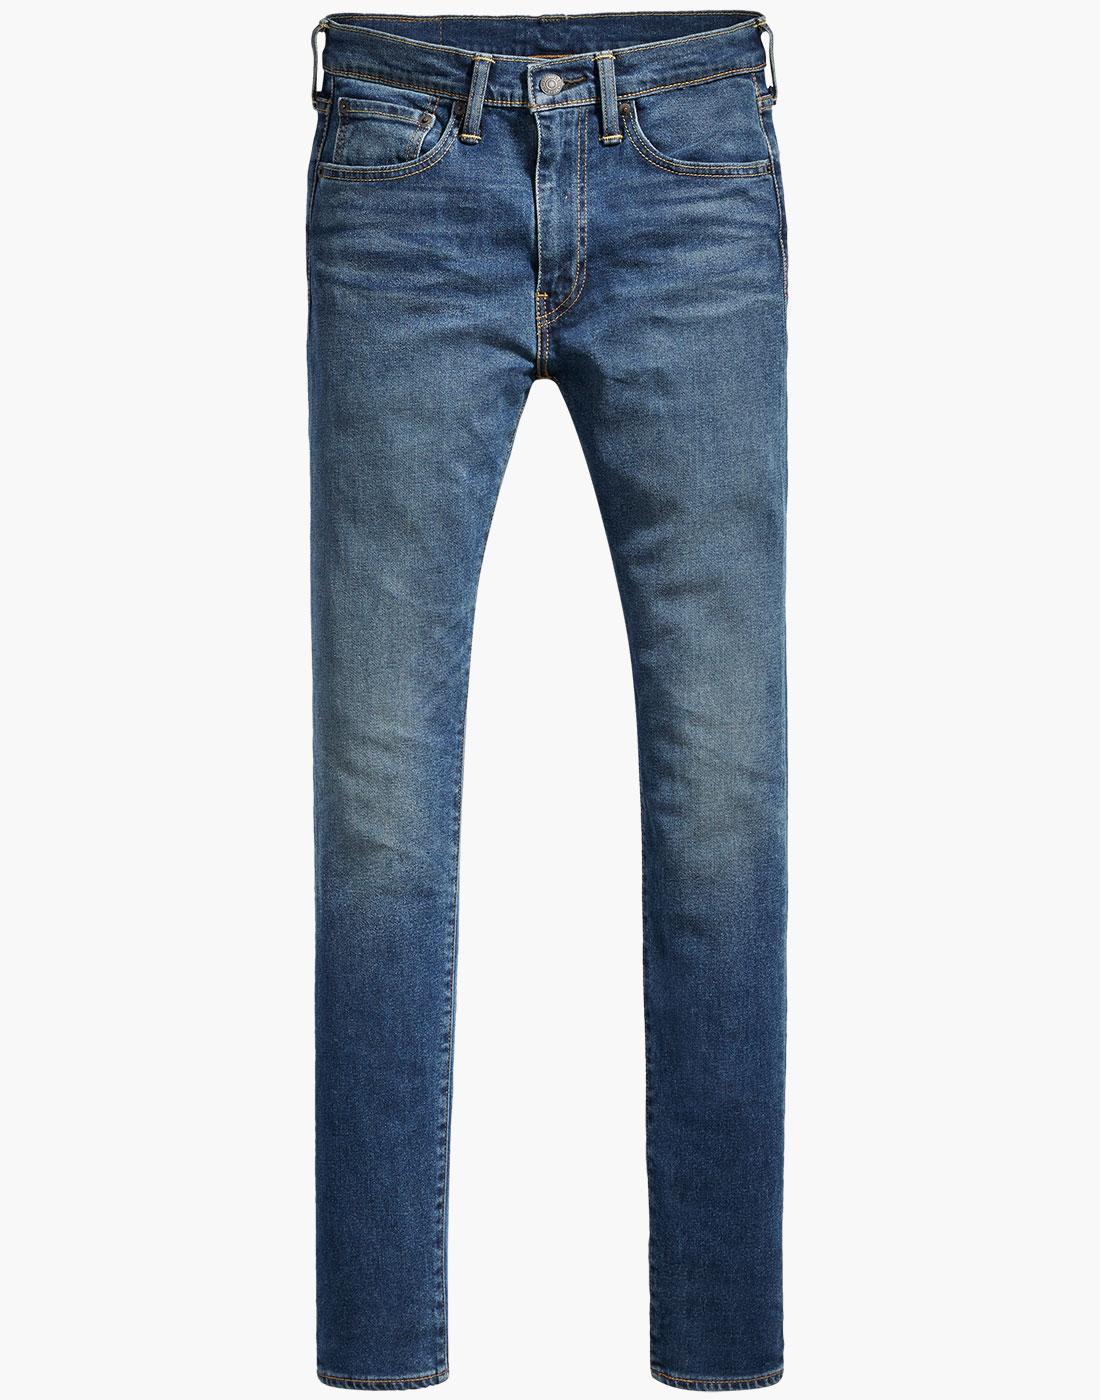 levi extreme skinny jeans